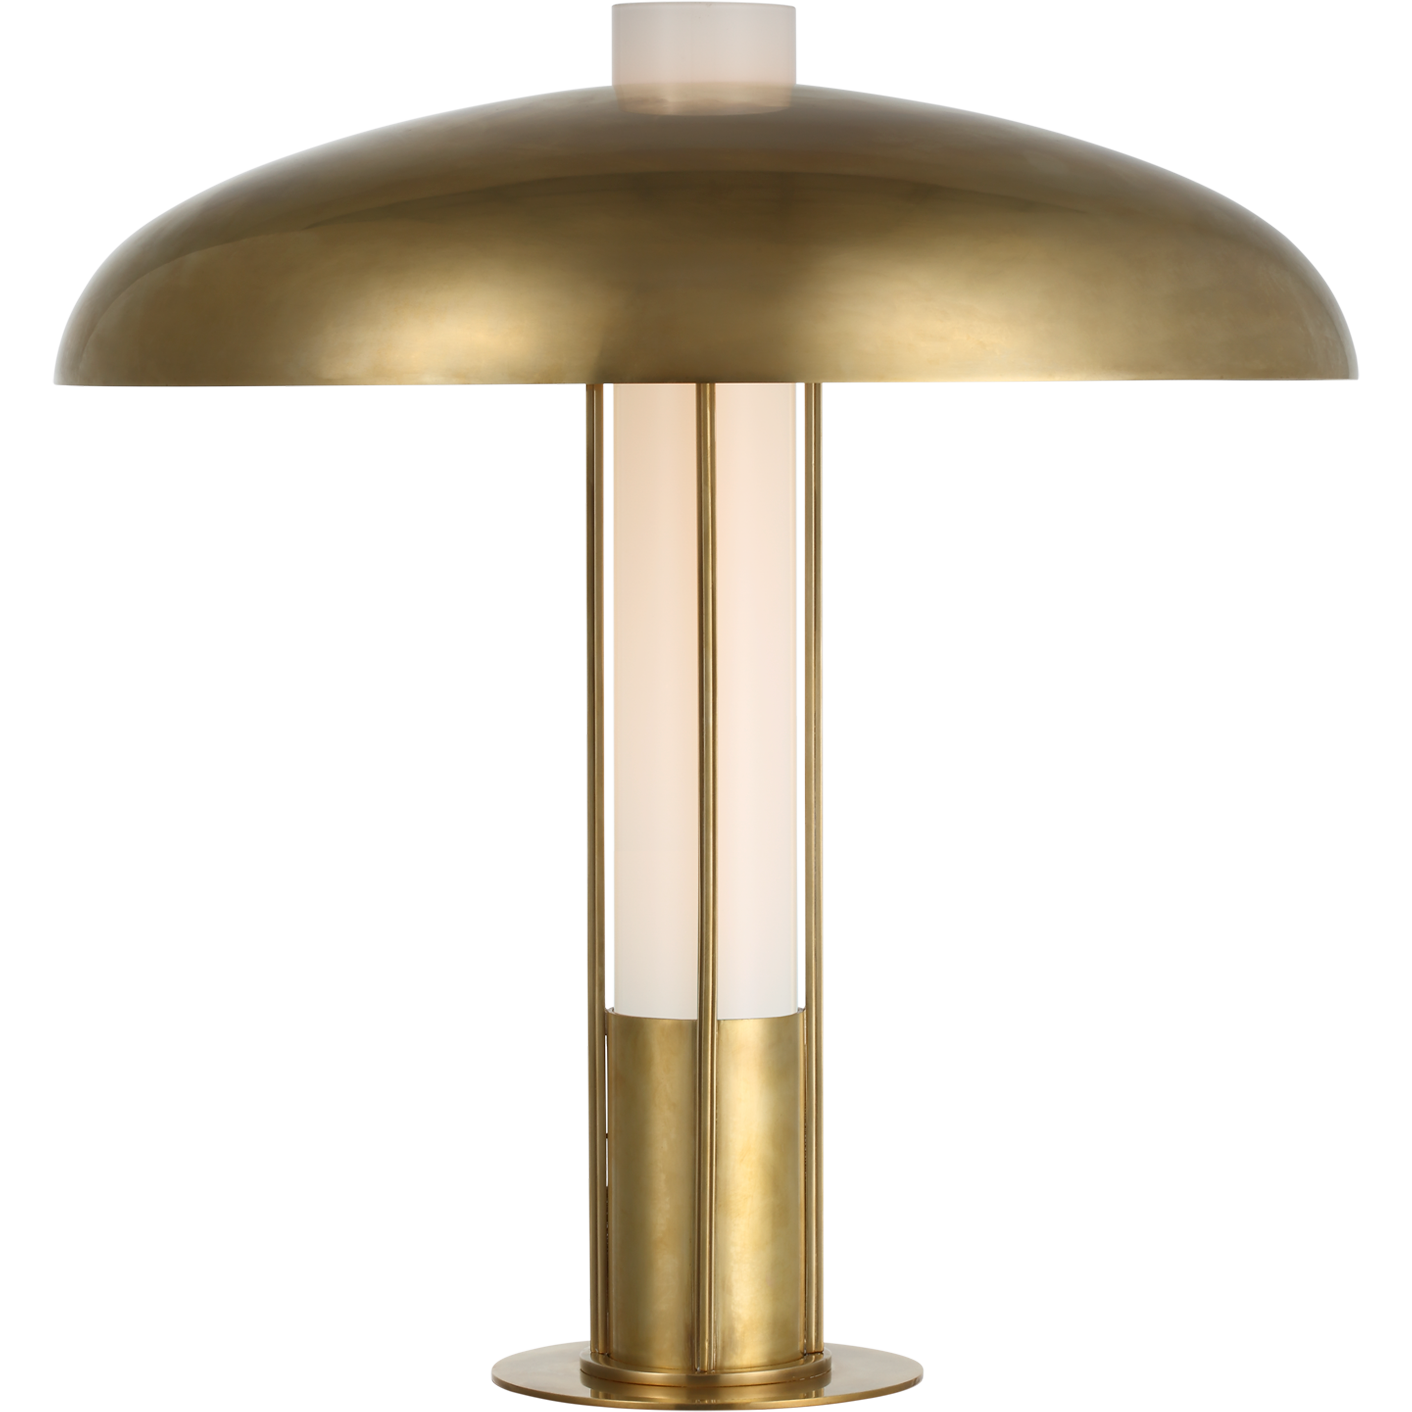 Troye Medium Table Lamp